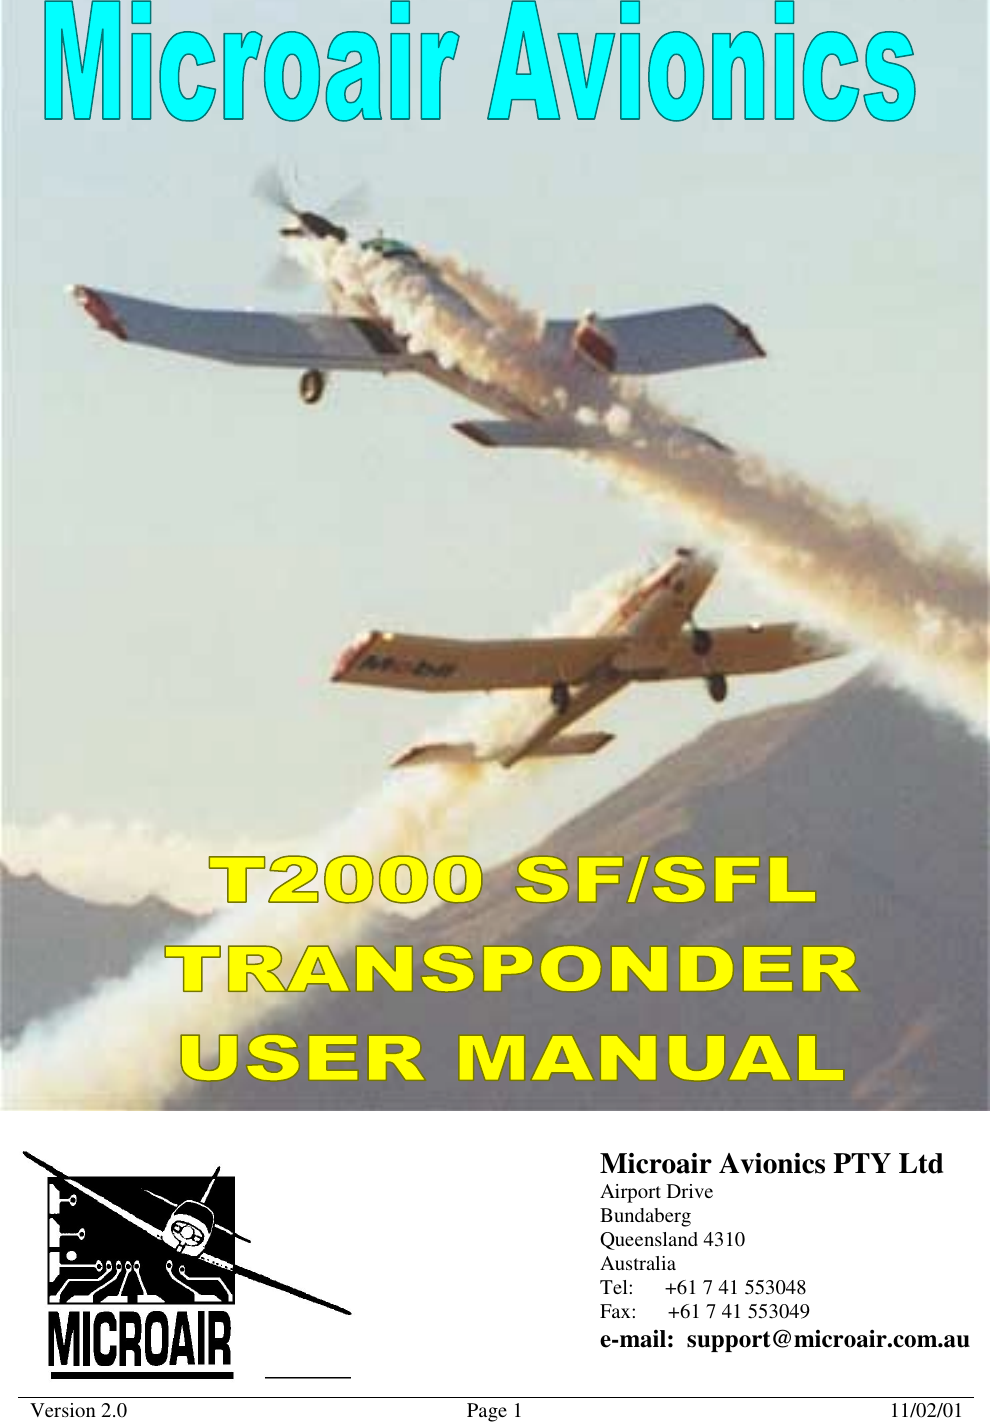 Microair Avionics  T2000 Transponder  User Manual  Version 2.0  Page 1  11/02/01      Microair Avionics PTY Ltd Airport Drive Bundaberg Queensland 4310 Australia Tel:      +61 7 41 553048 Fax:      +61 7 41 553049 e-mail:  support@microair.com.au 